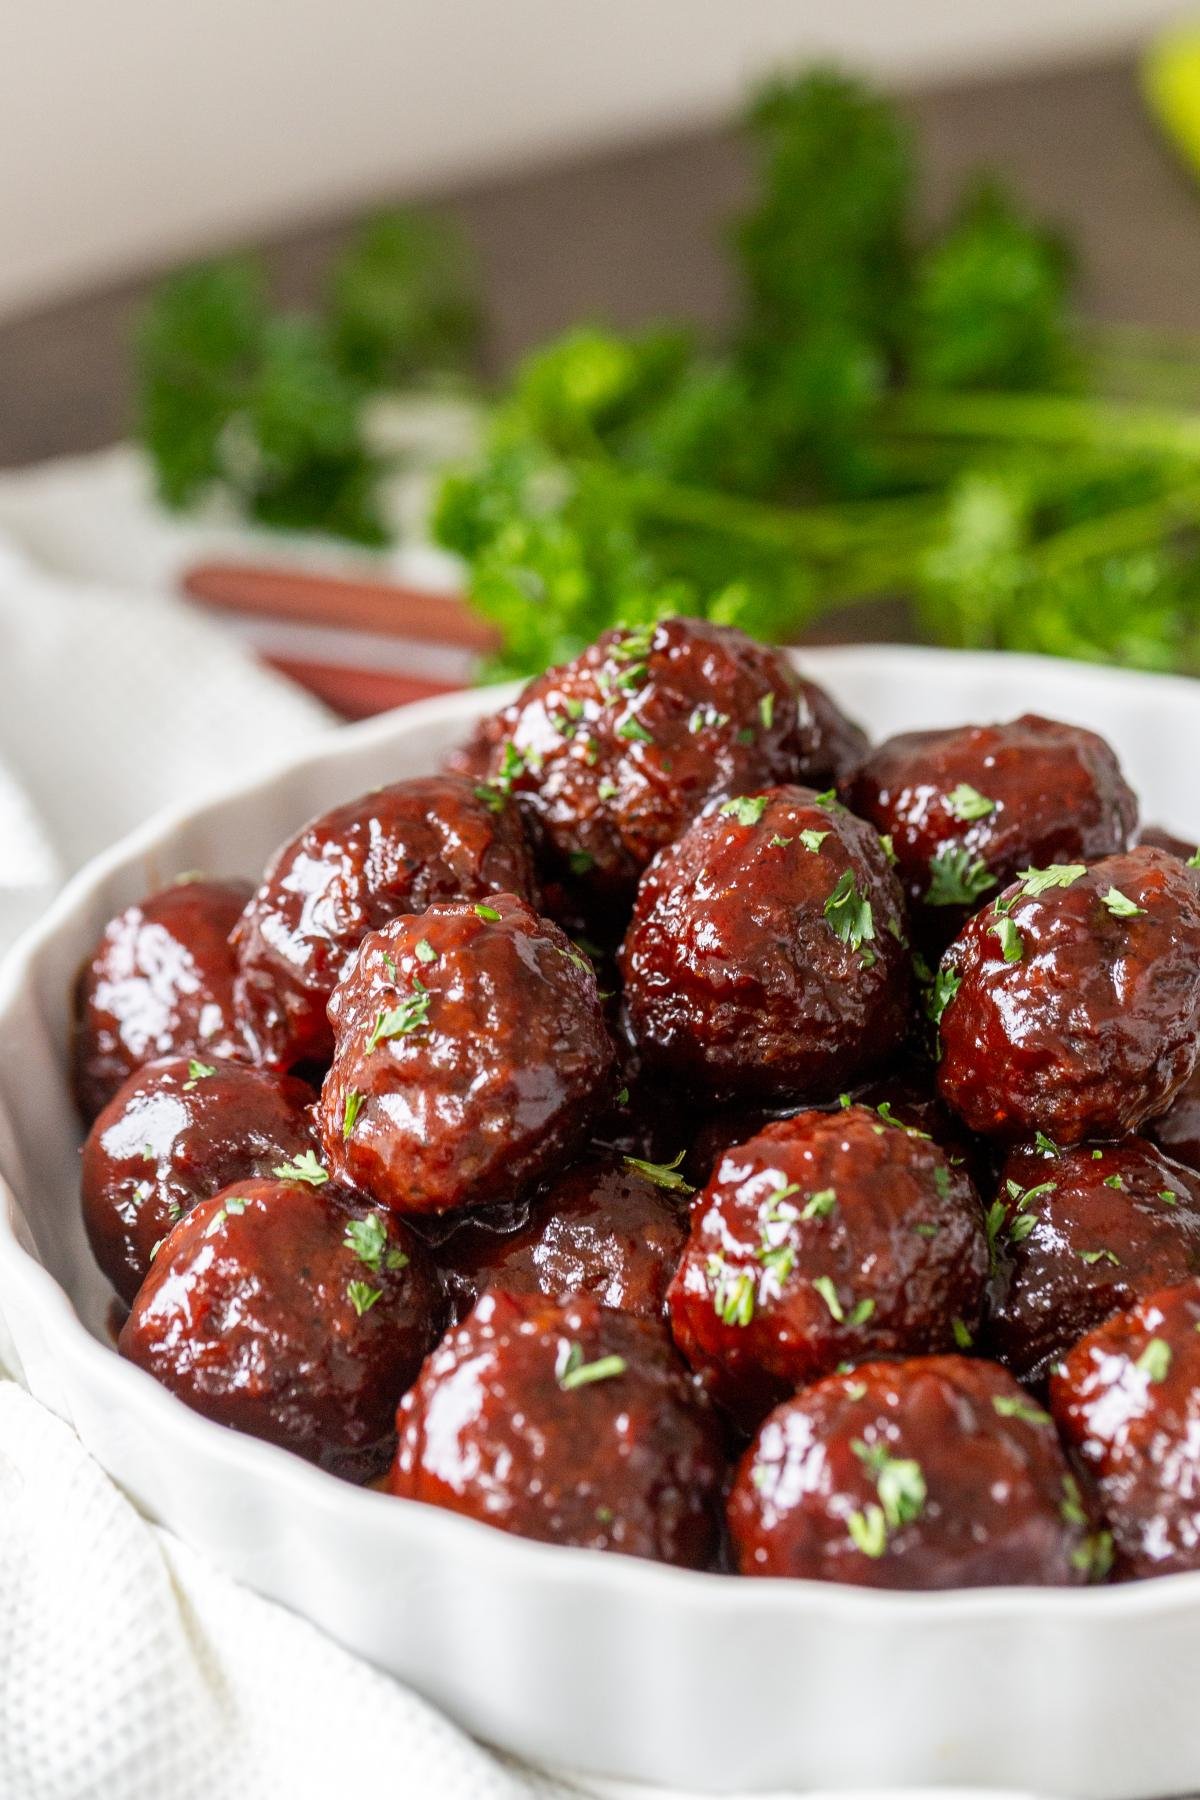 Slow Cooker Grape Jelly Meatballs - Slow Cooker Gourmet